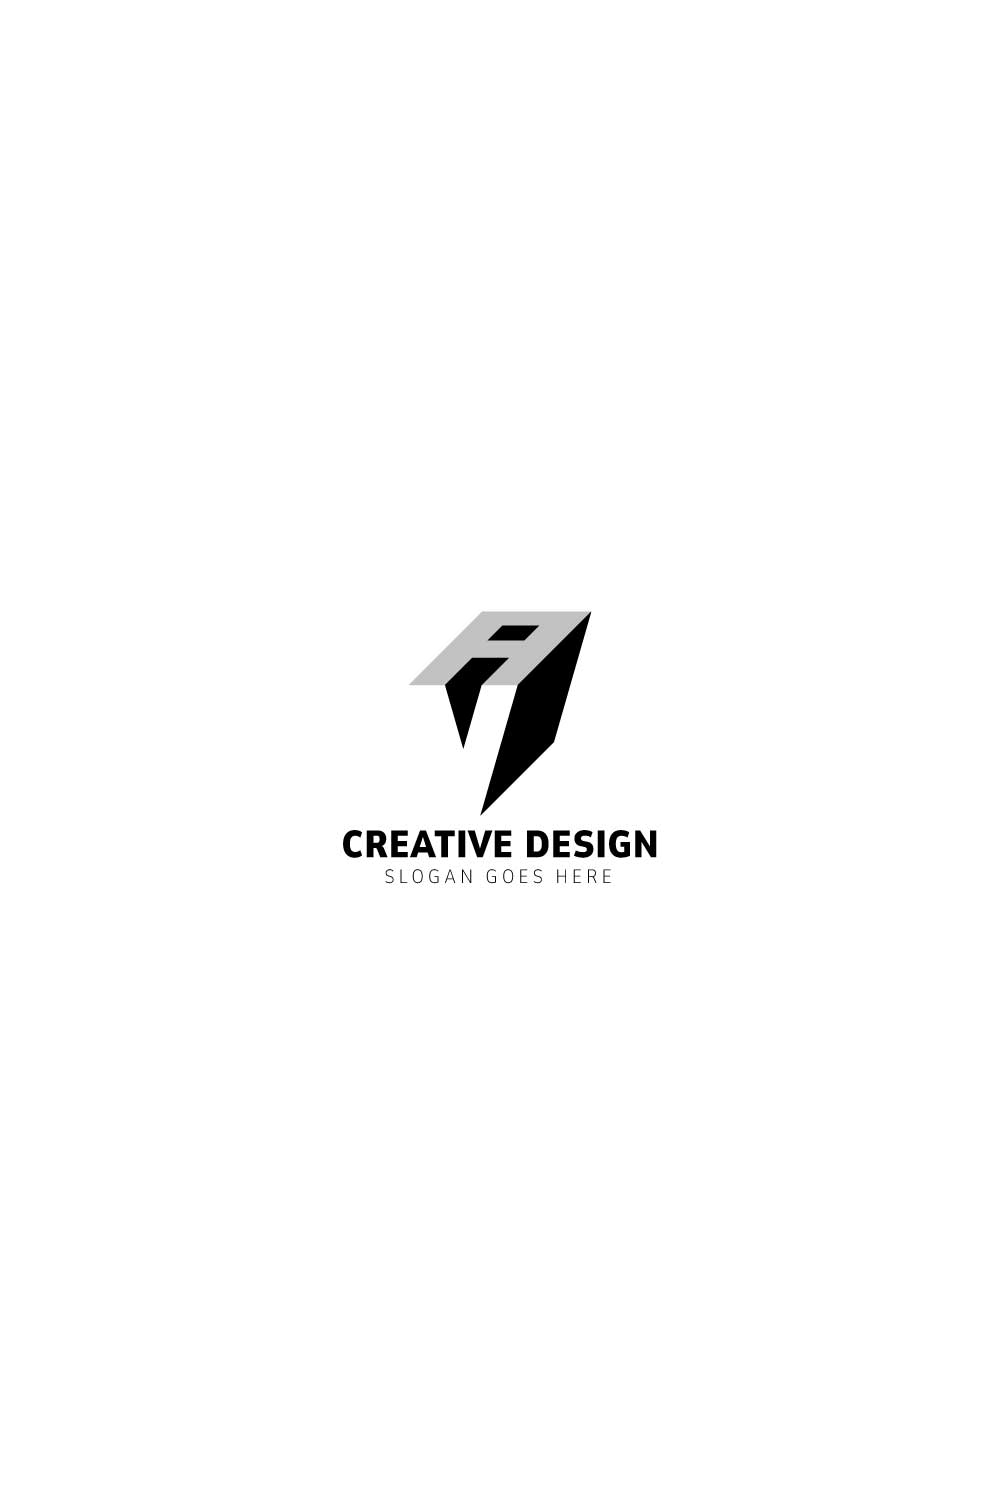 Creative letter AH logo pinterest preview image.